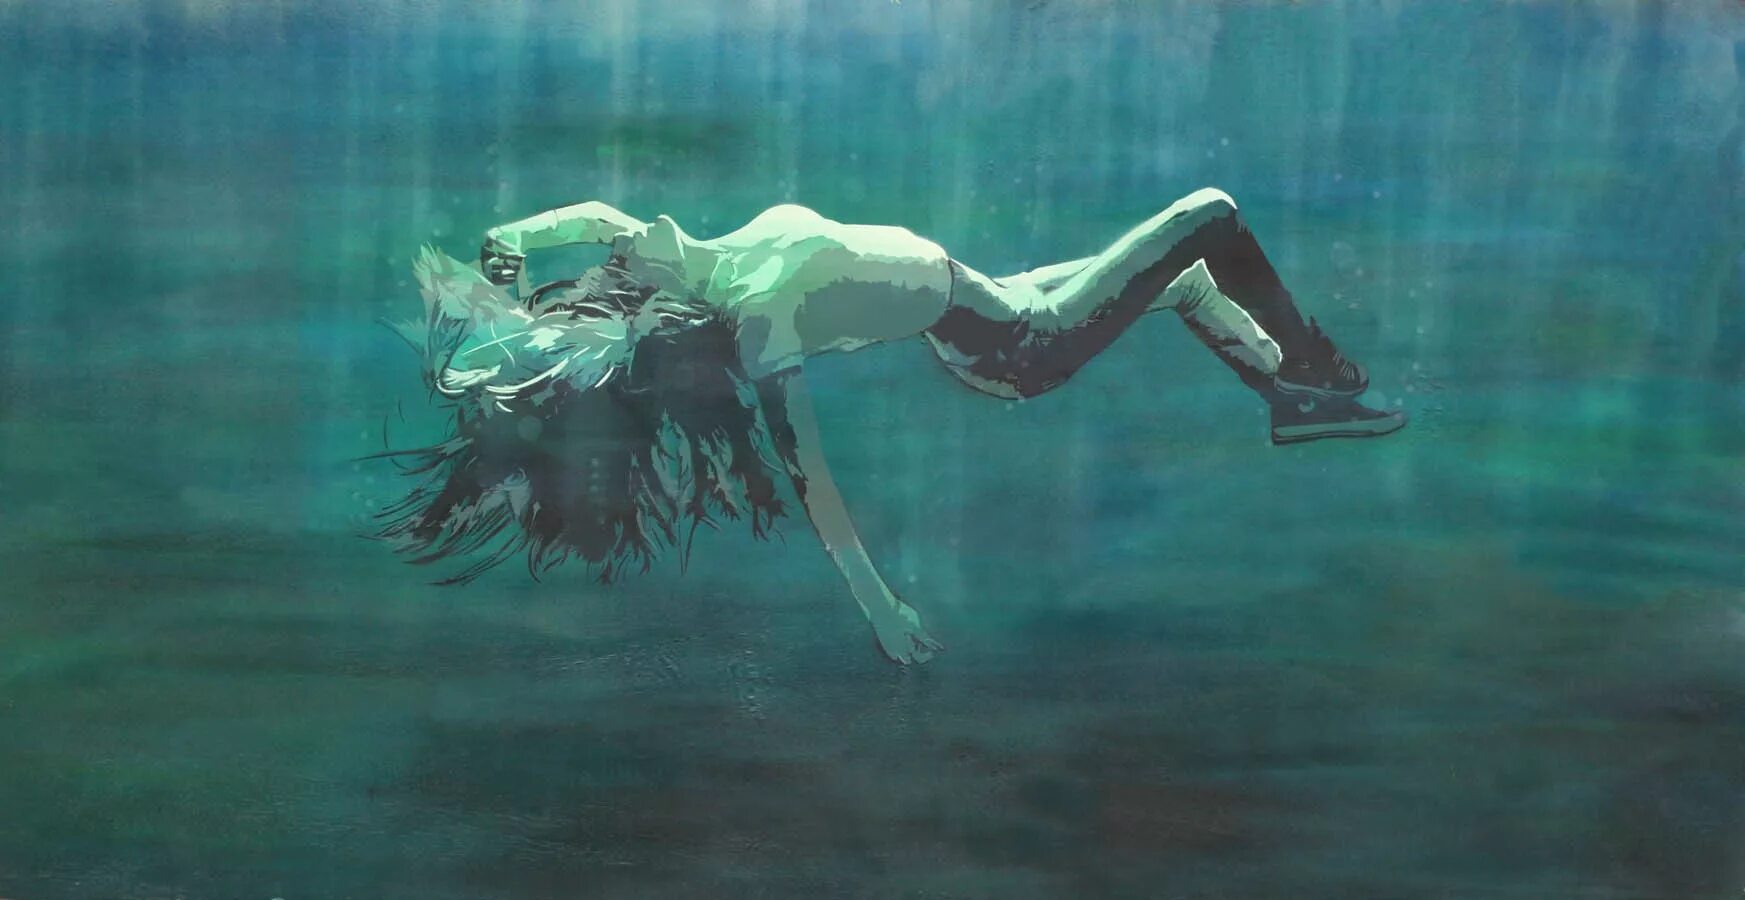 Floating in class scary video. Человек в воде арт. Человек на поверхности воды. Человек на поверхности воды арт. Вода арт.